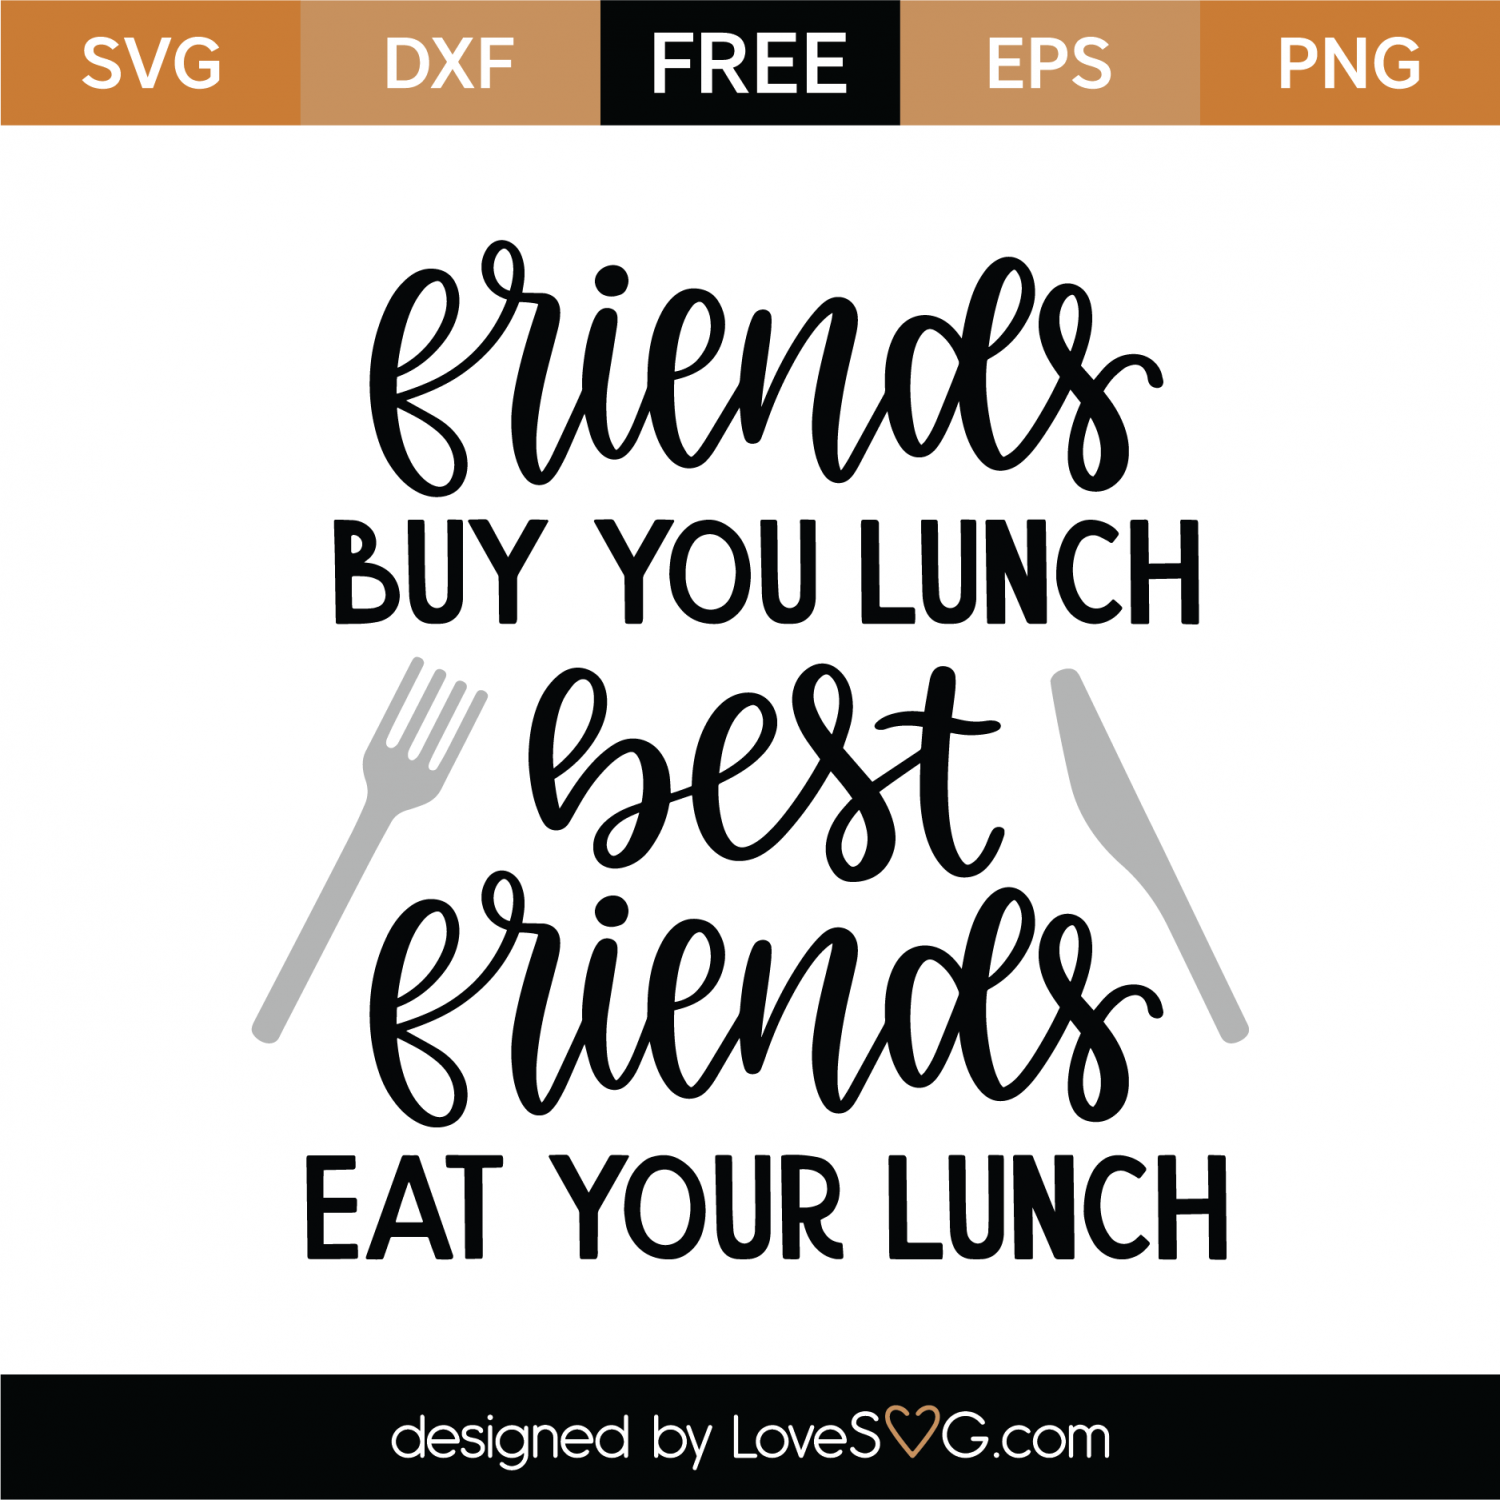 Free Best Friends Eat Your Lunch SVG Cut File | Lovesvg.com